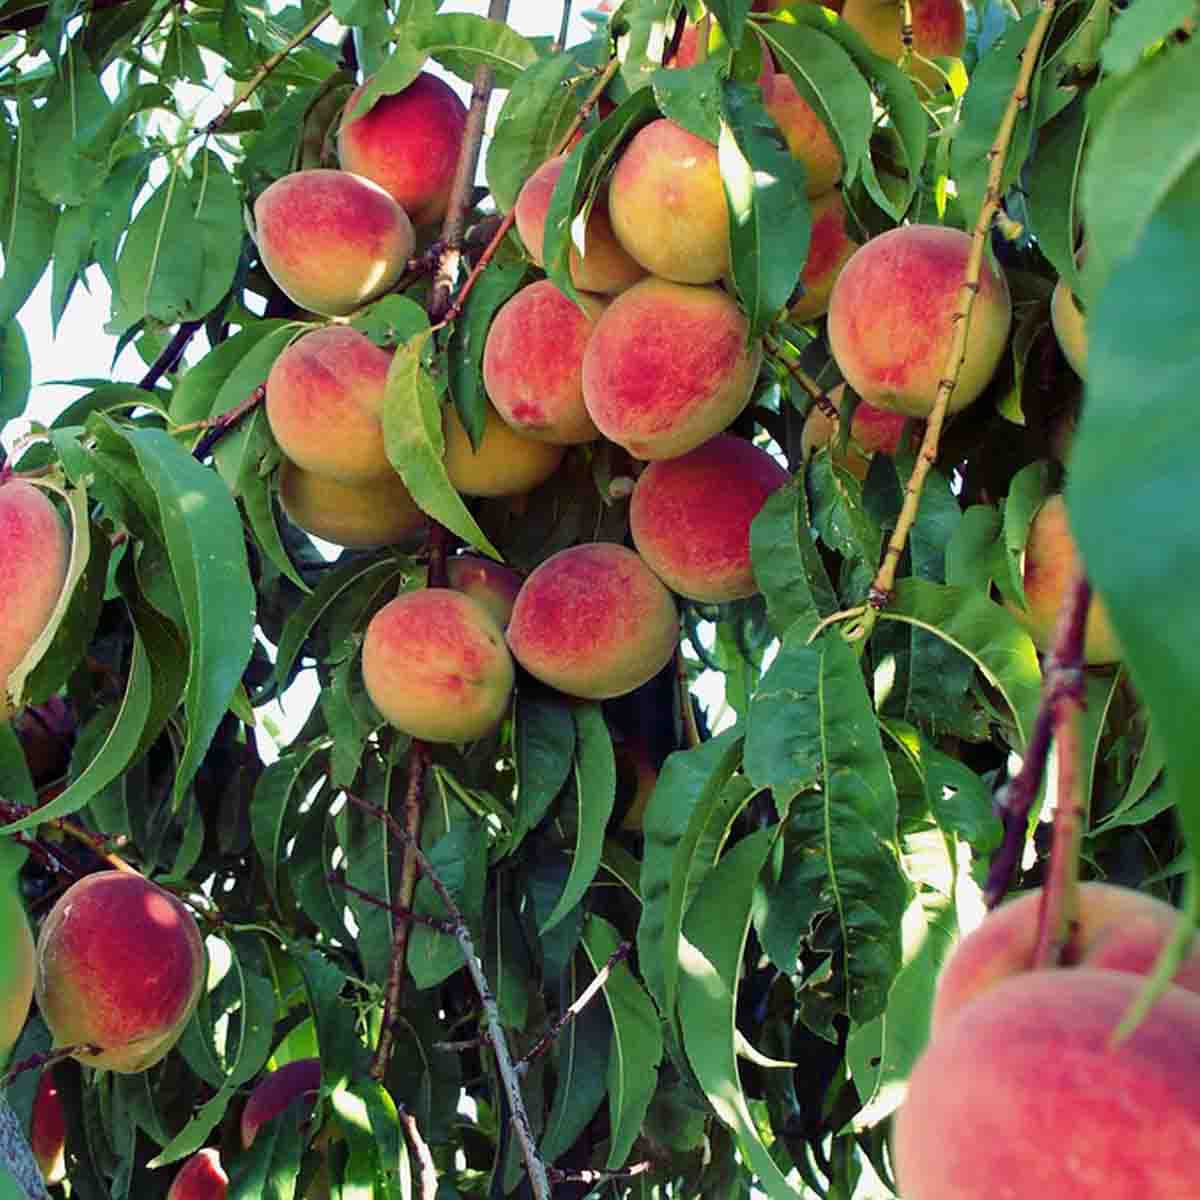 A peach tree